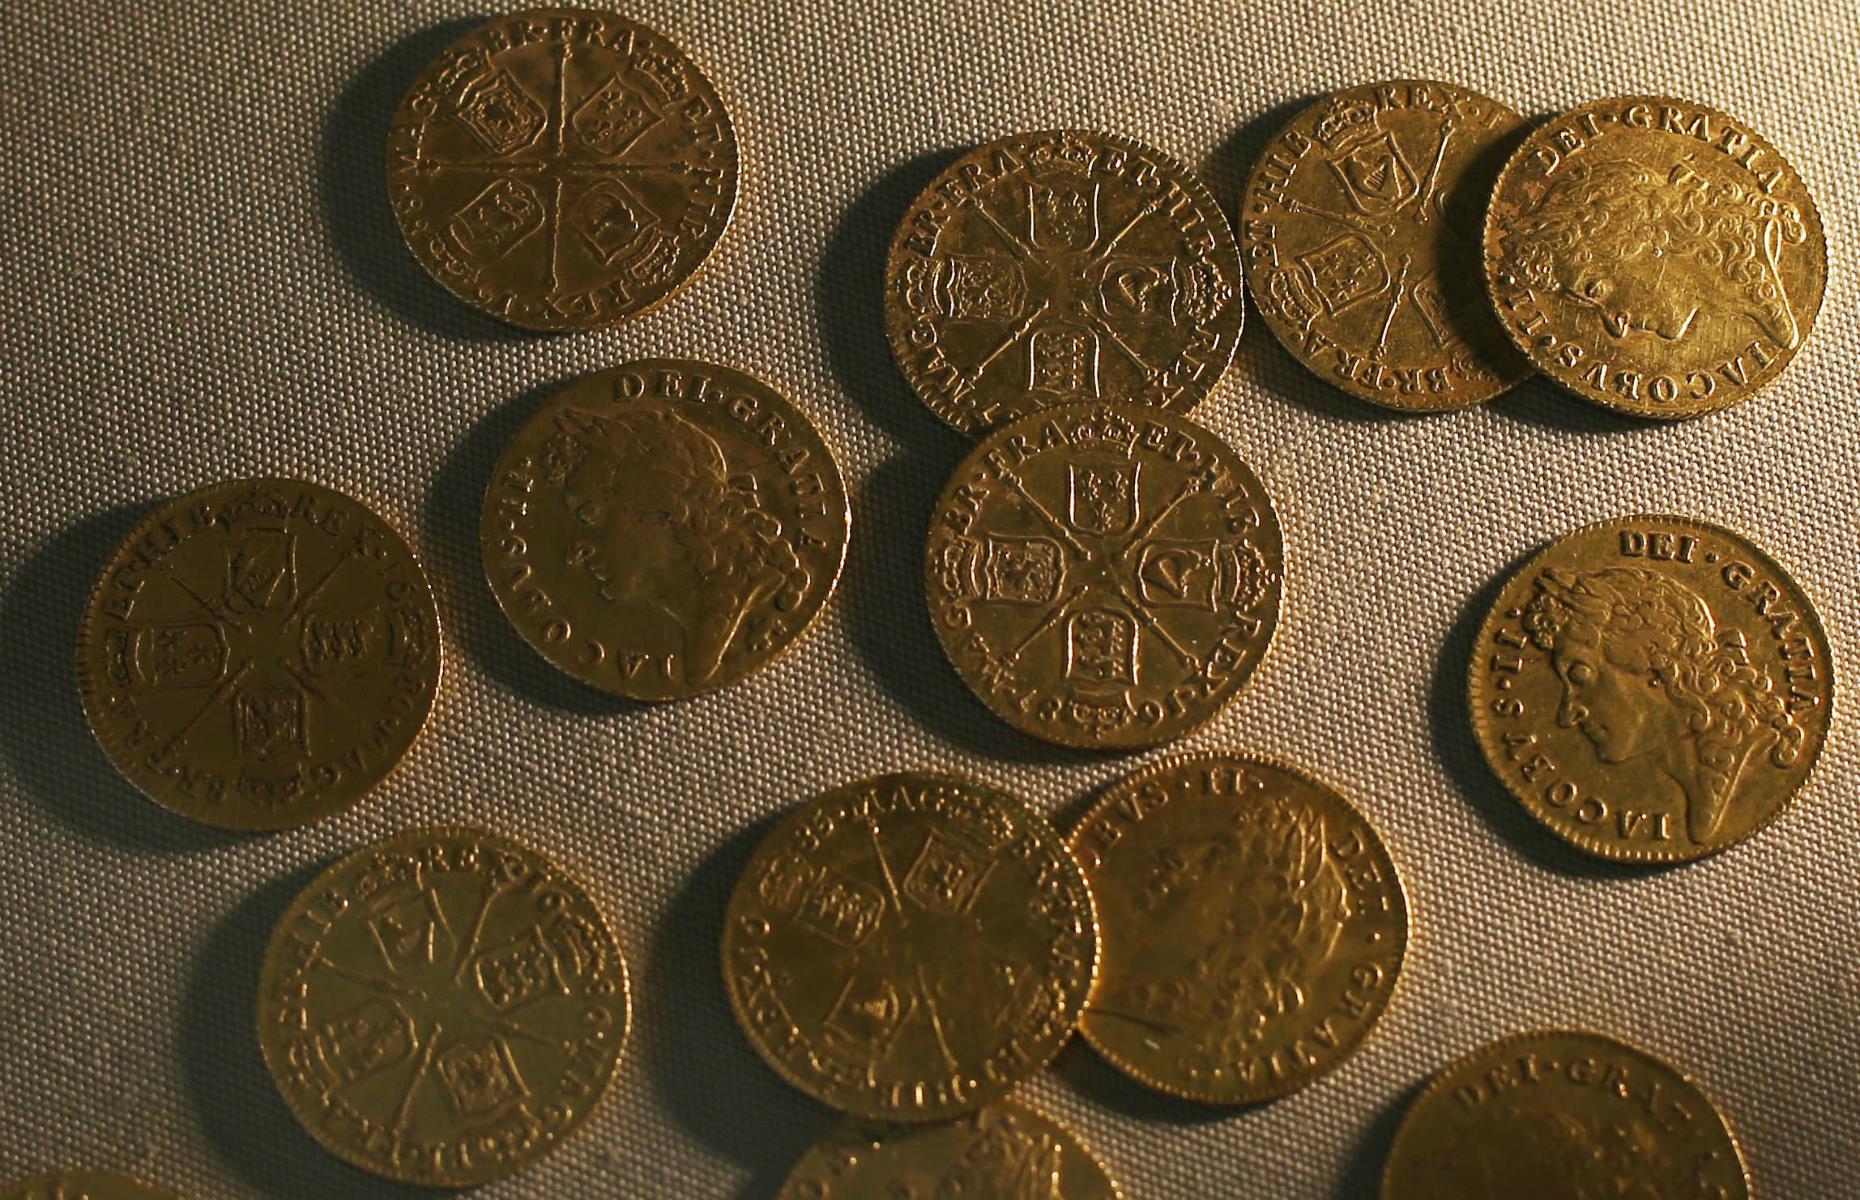 Gold coins found in a pub, Ireland: value unknown